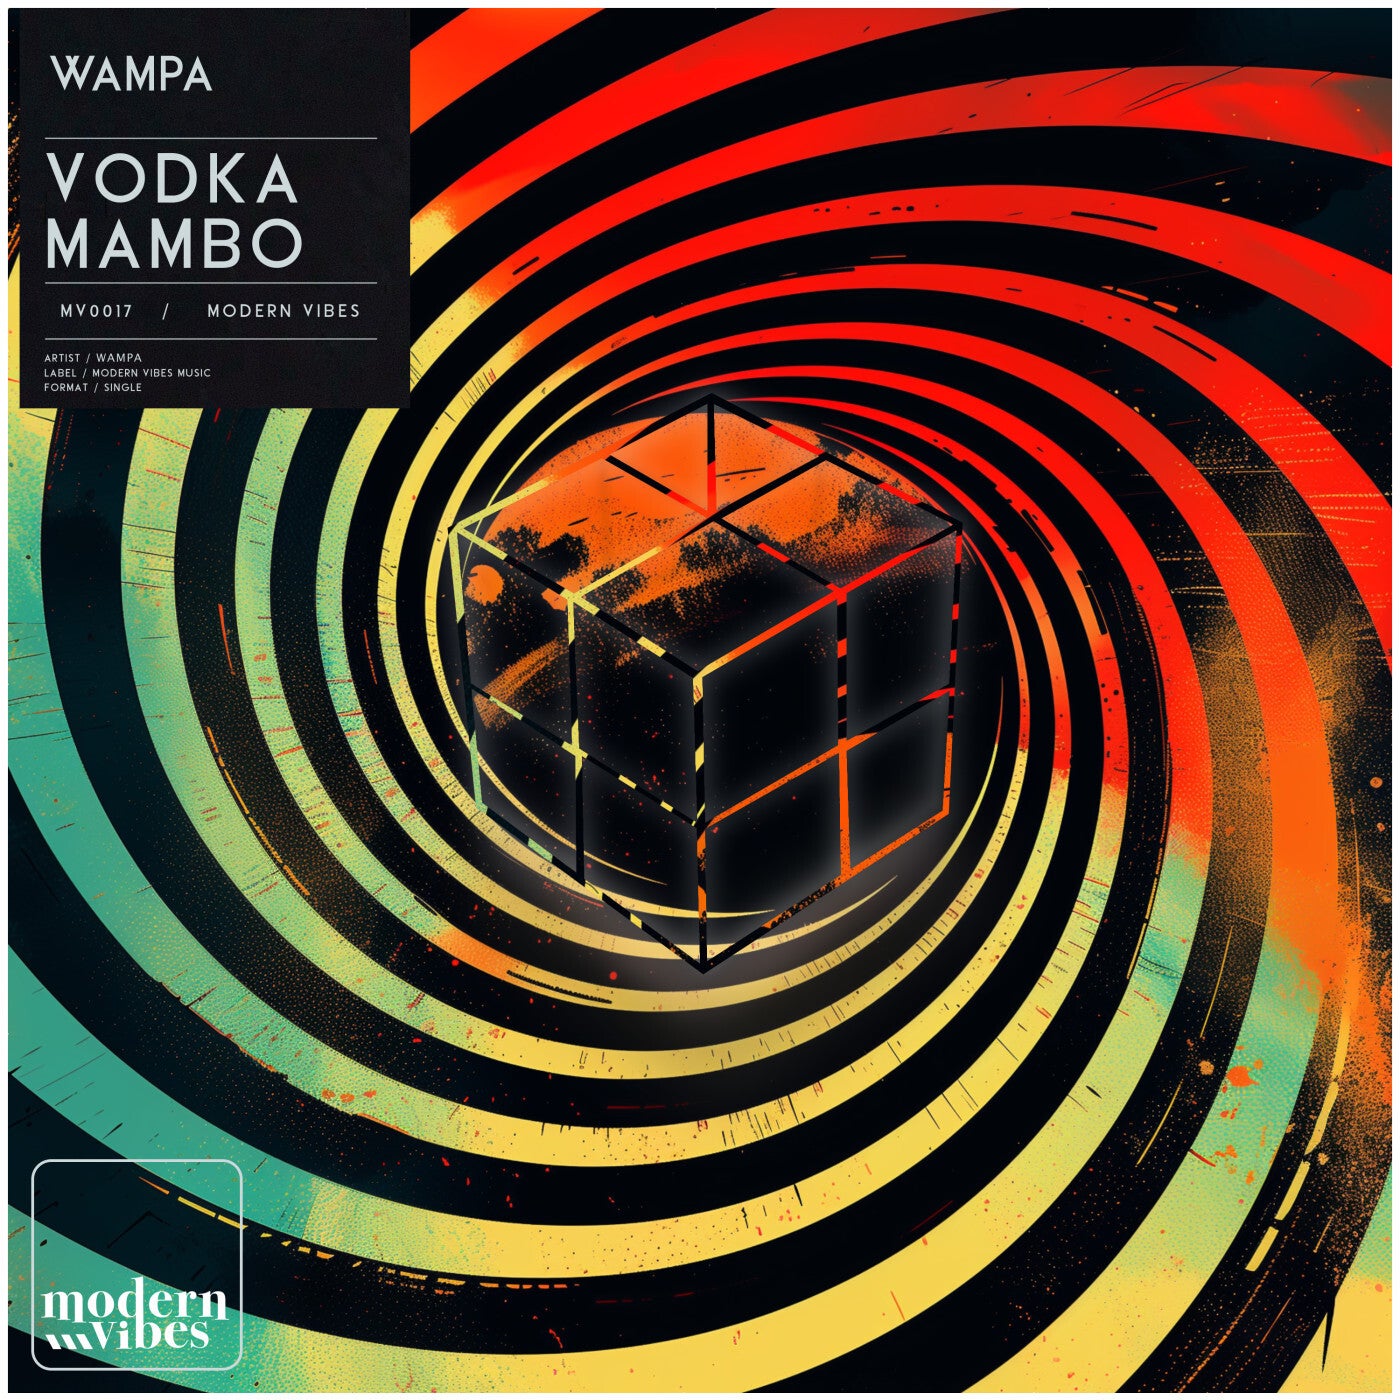 Vodka Mambo